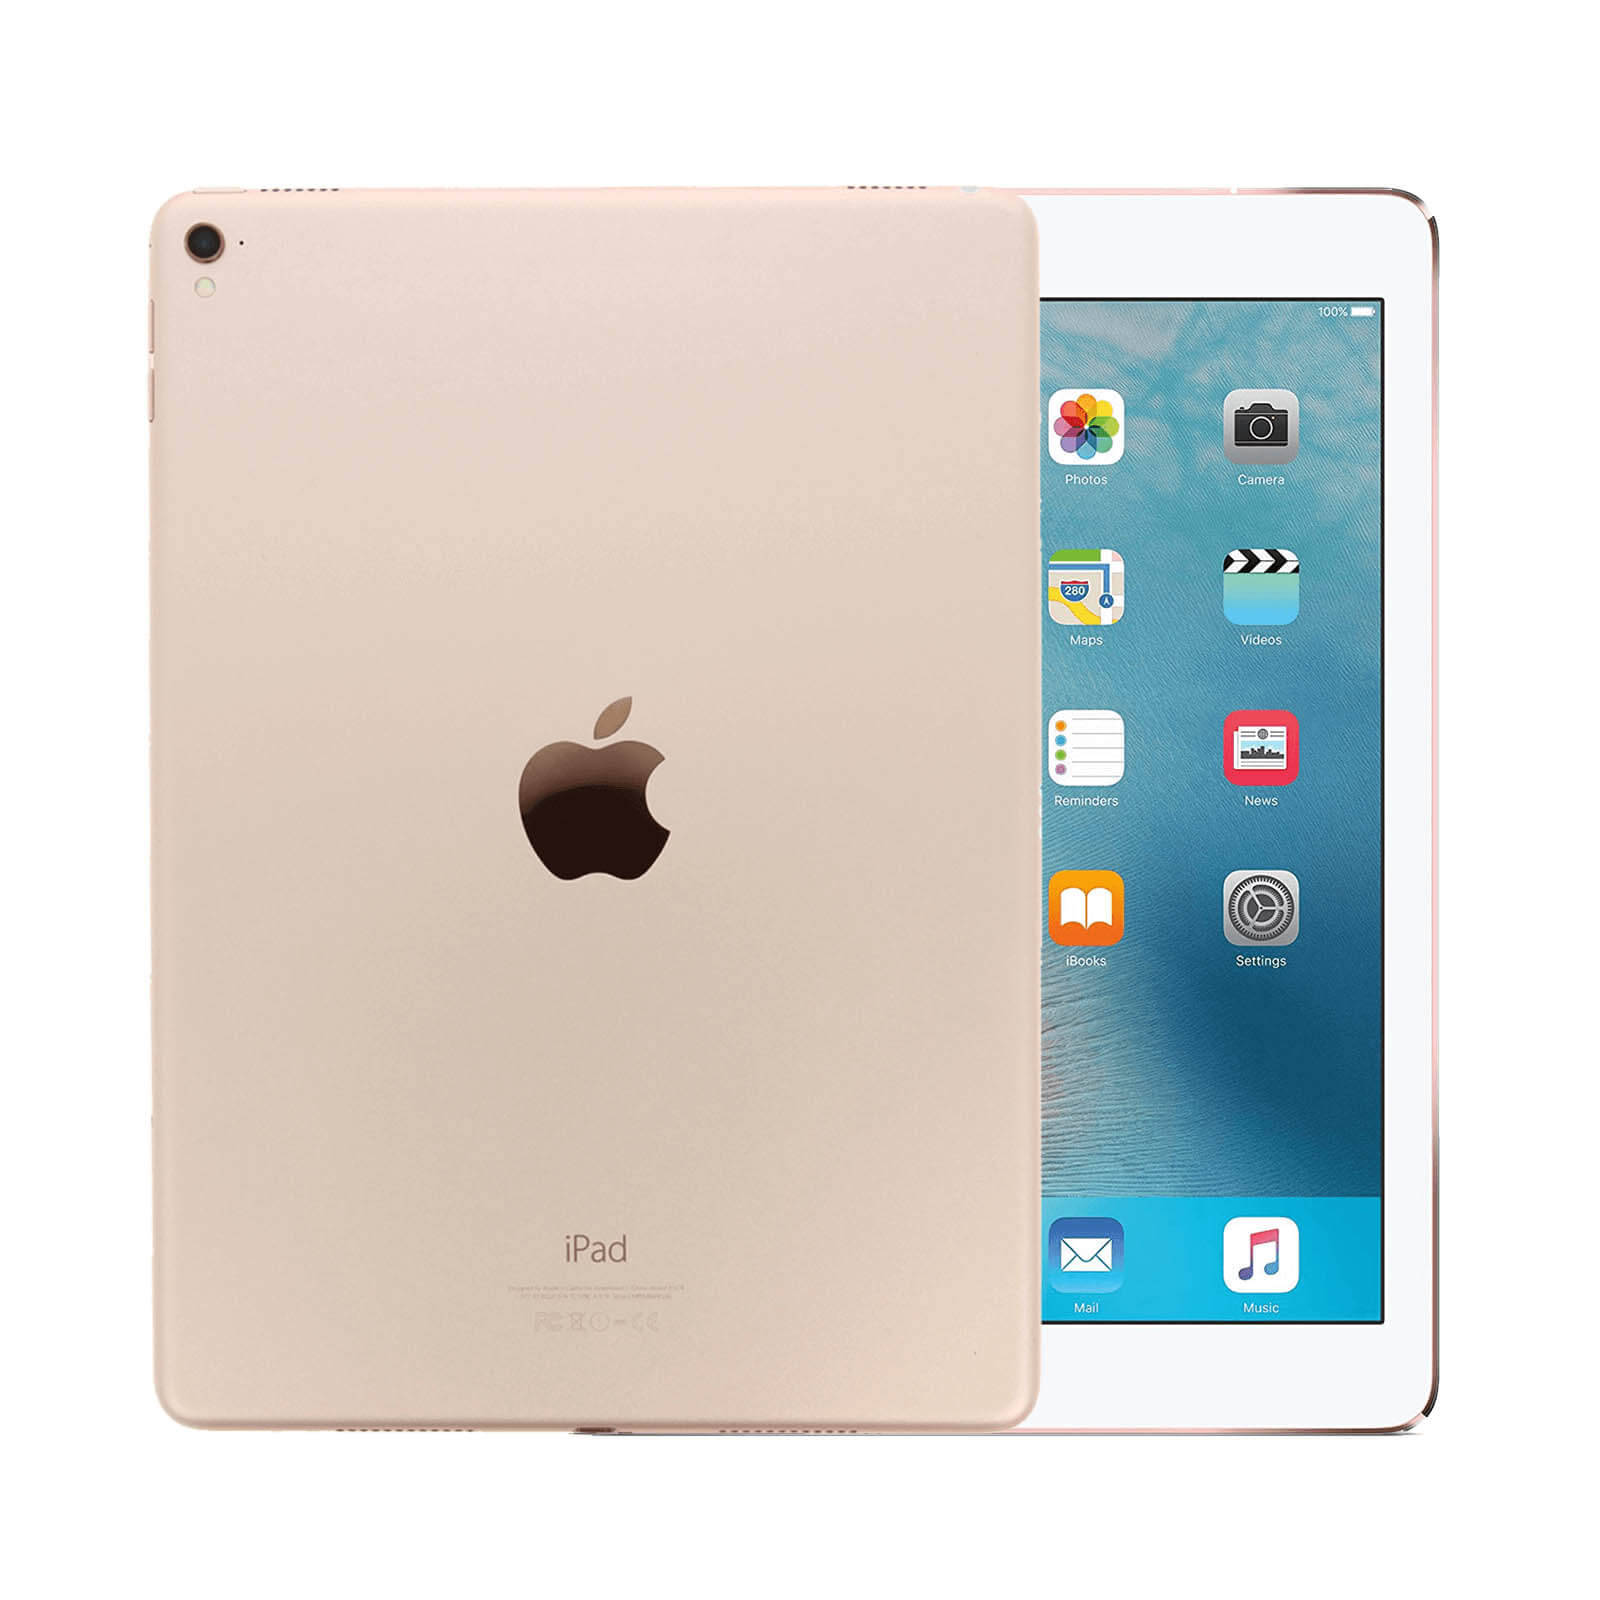 iPad Pro 9.7 Inch 32GB Gold Pristine - WiFi